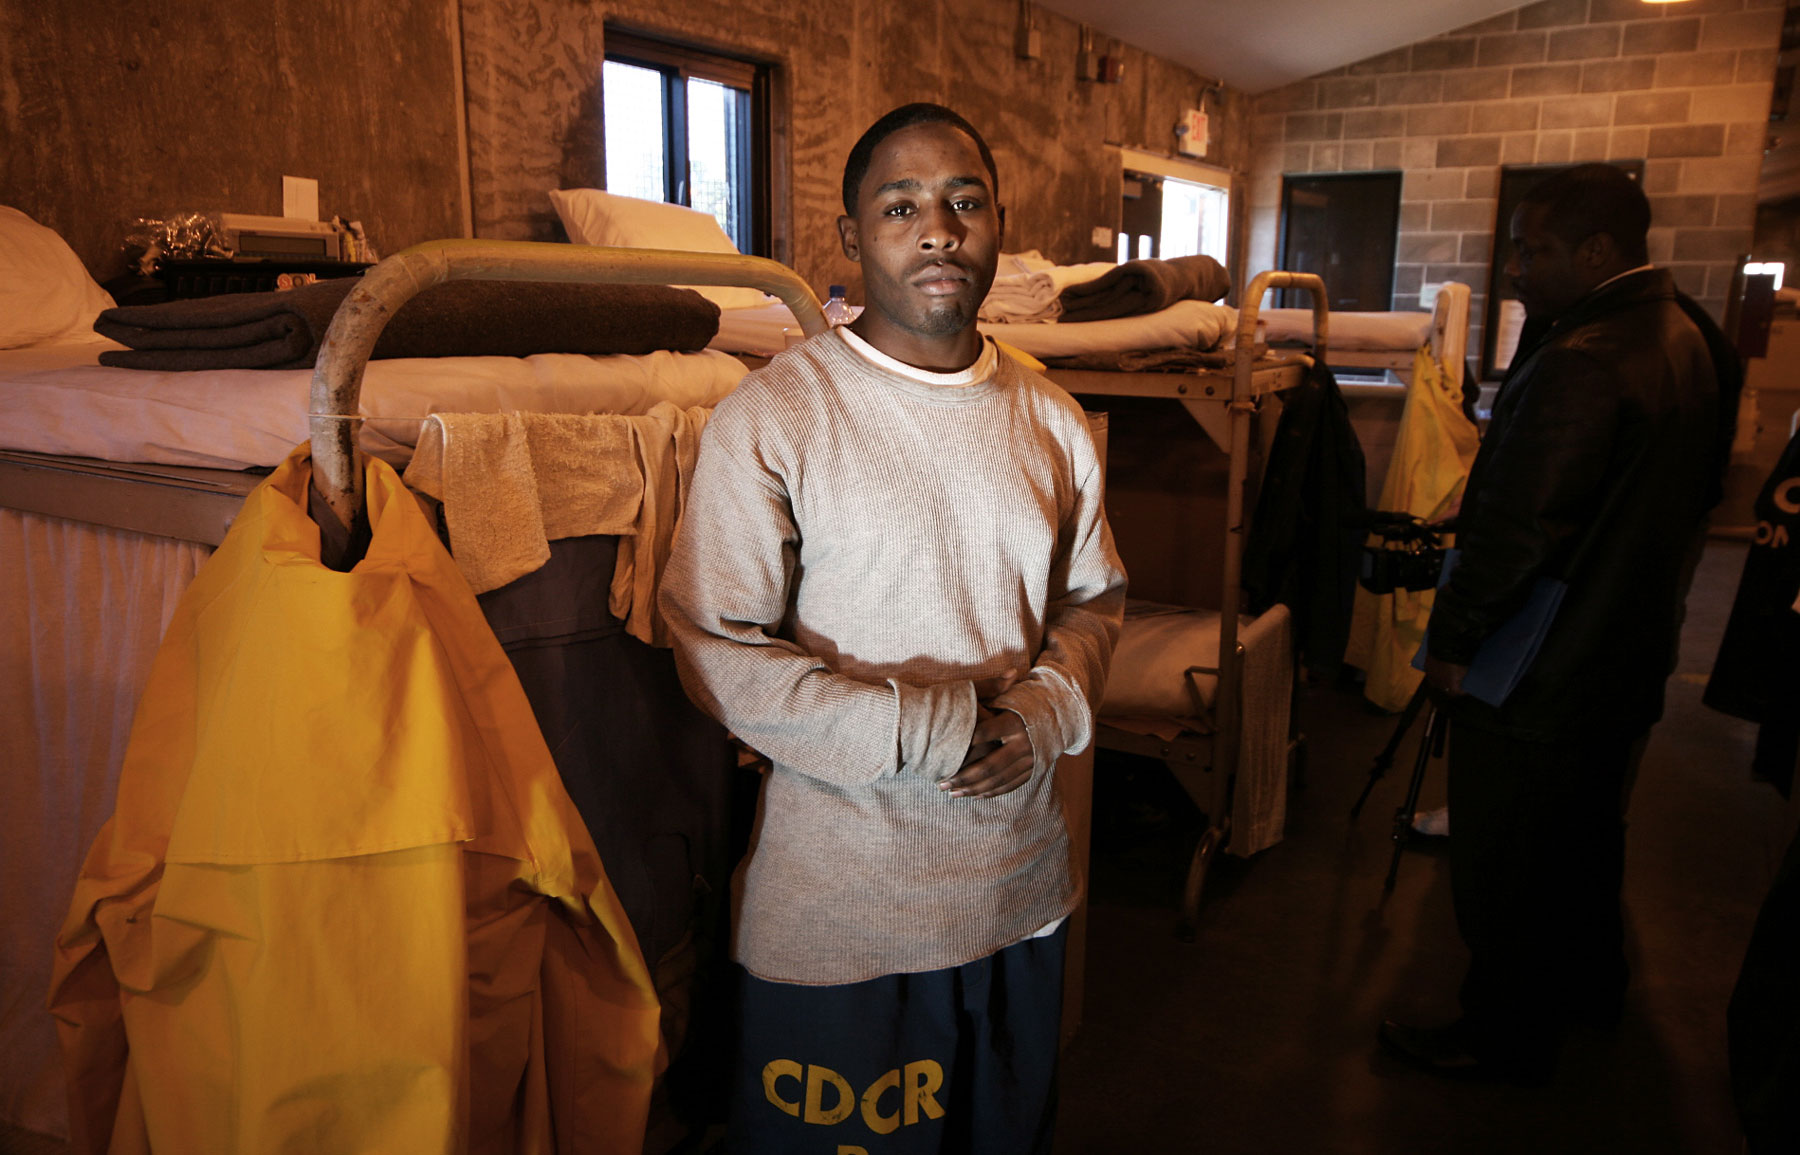 Photo taken in H-unit, San Quentin Prison